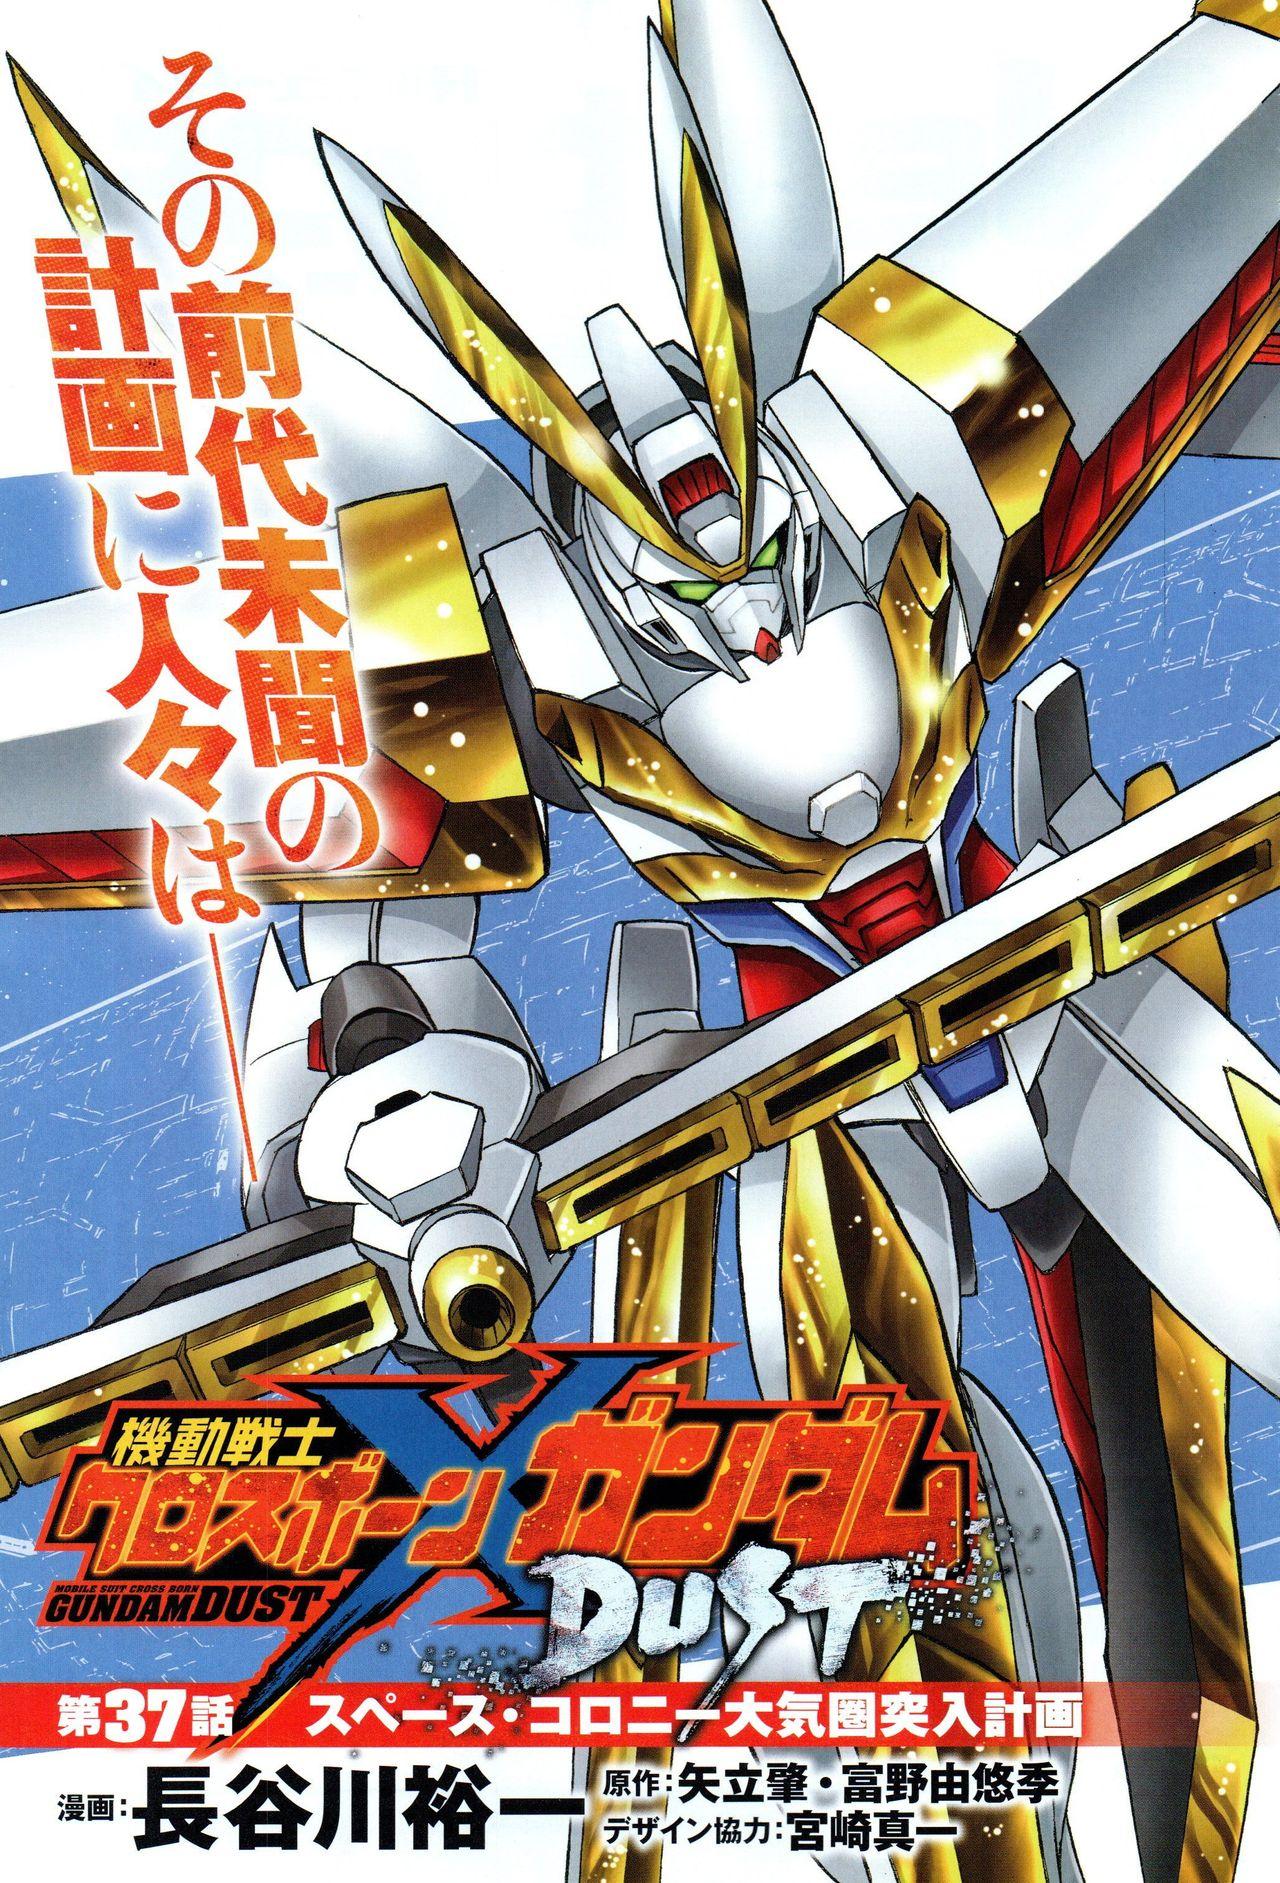 Gundam Ace - October 2019 399